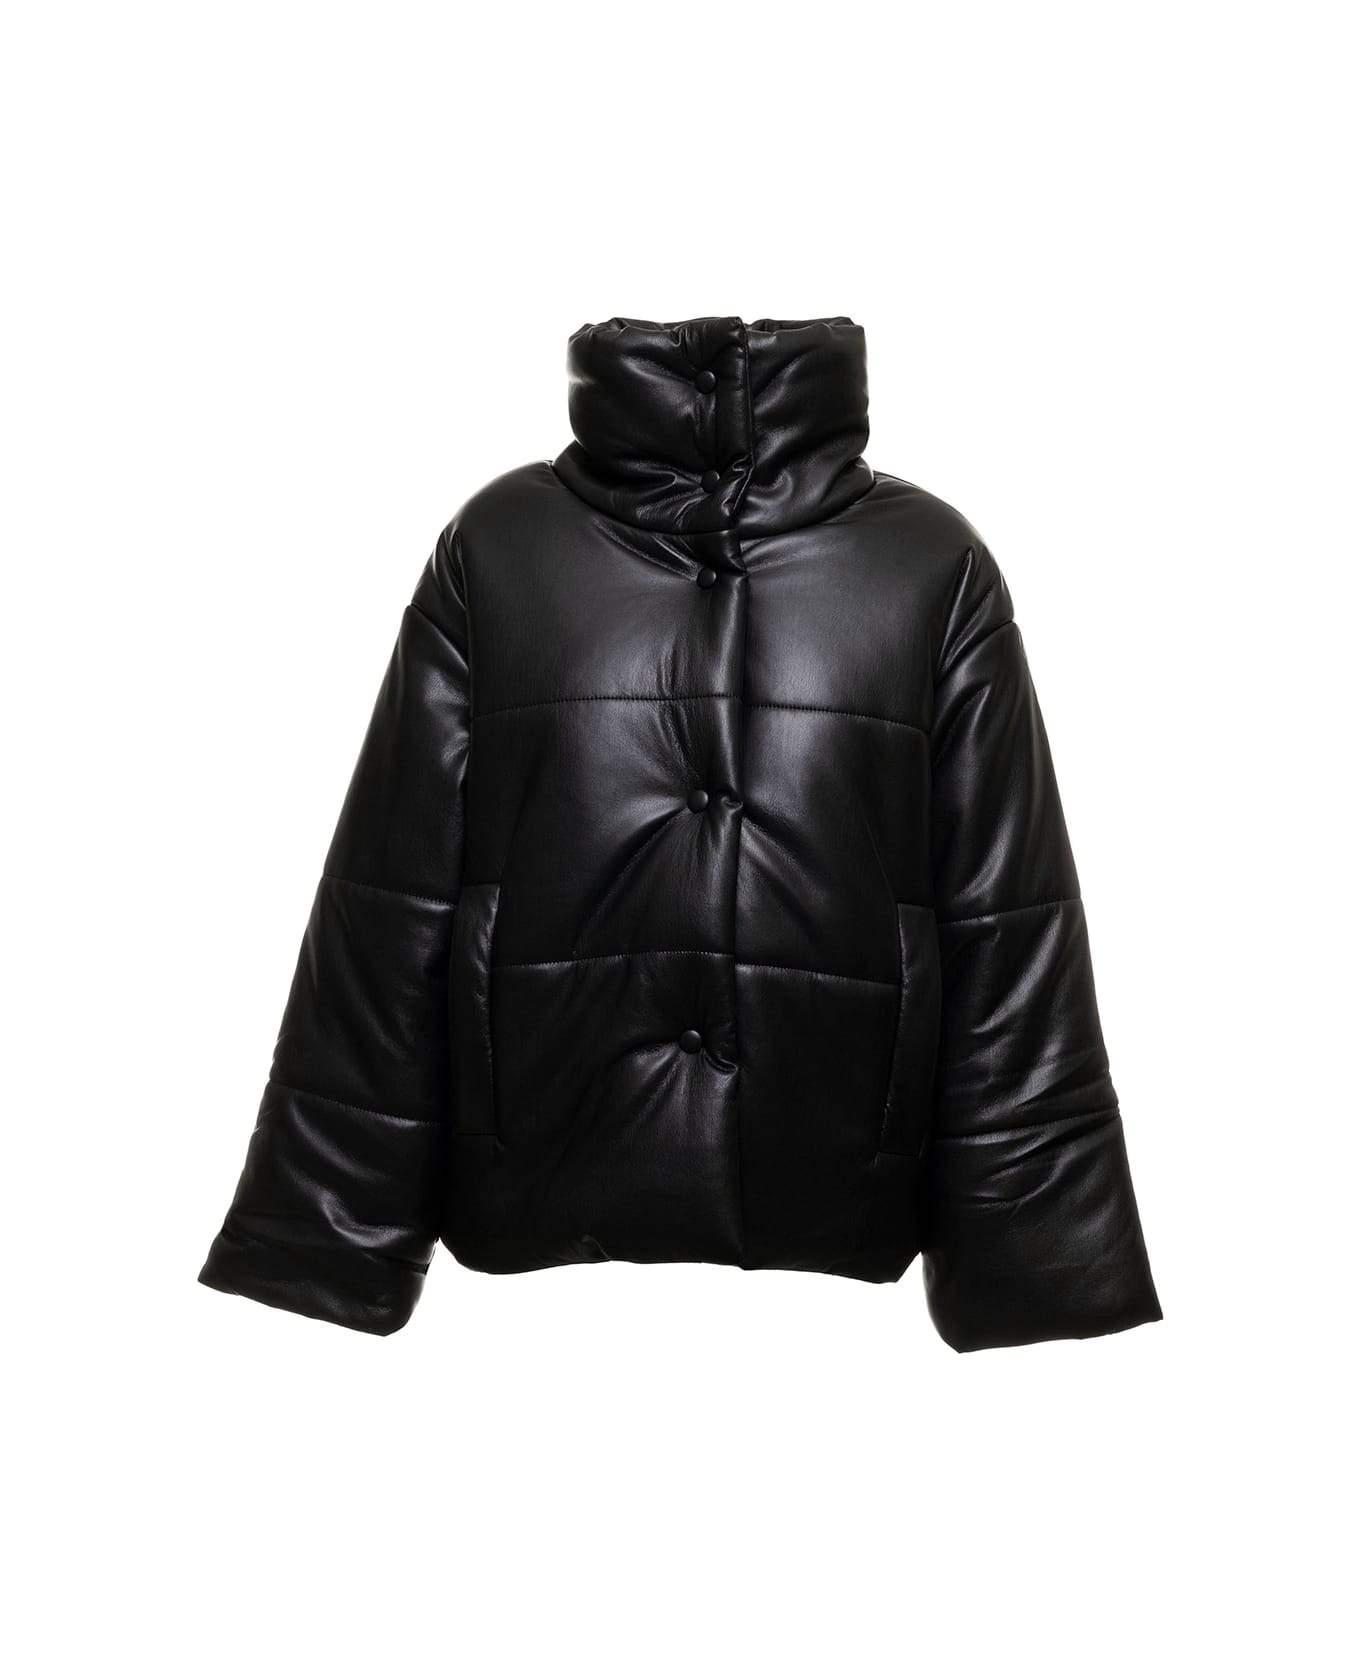 Nanushka Black Vegan Leather Quilted Jacket Nanuskha Woman - Black ジャケット